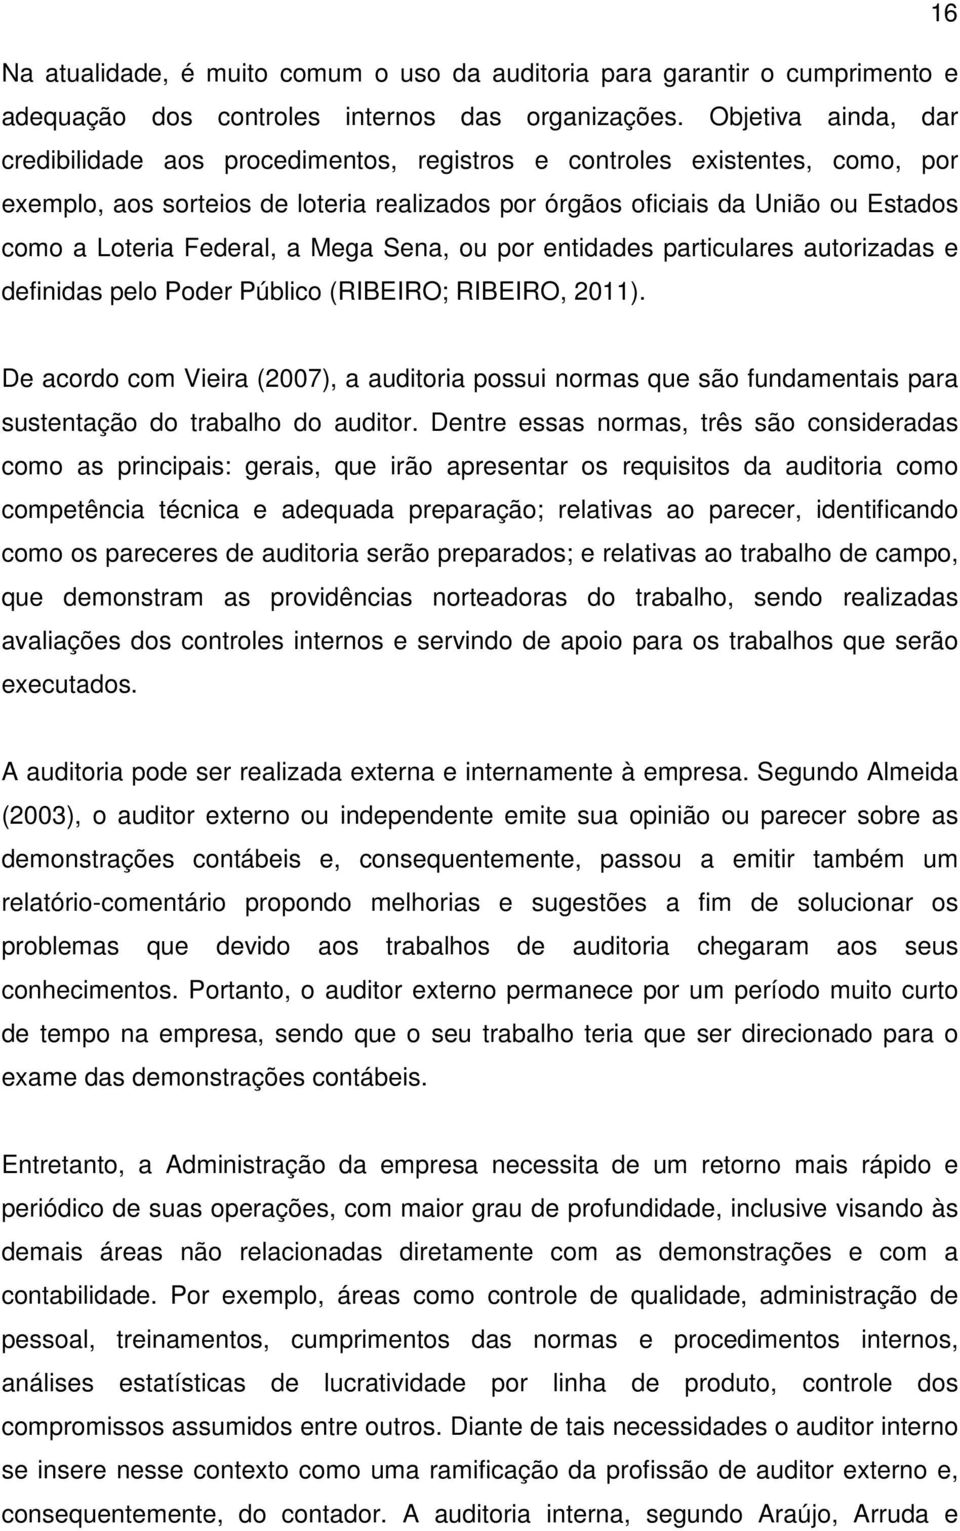 Federal, a Mega Sena, ou por entidades particulares autorizadas e definidas pelo Poder Público (RIBEIRO; RIBEIRO, 2011).